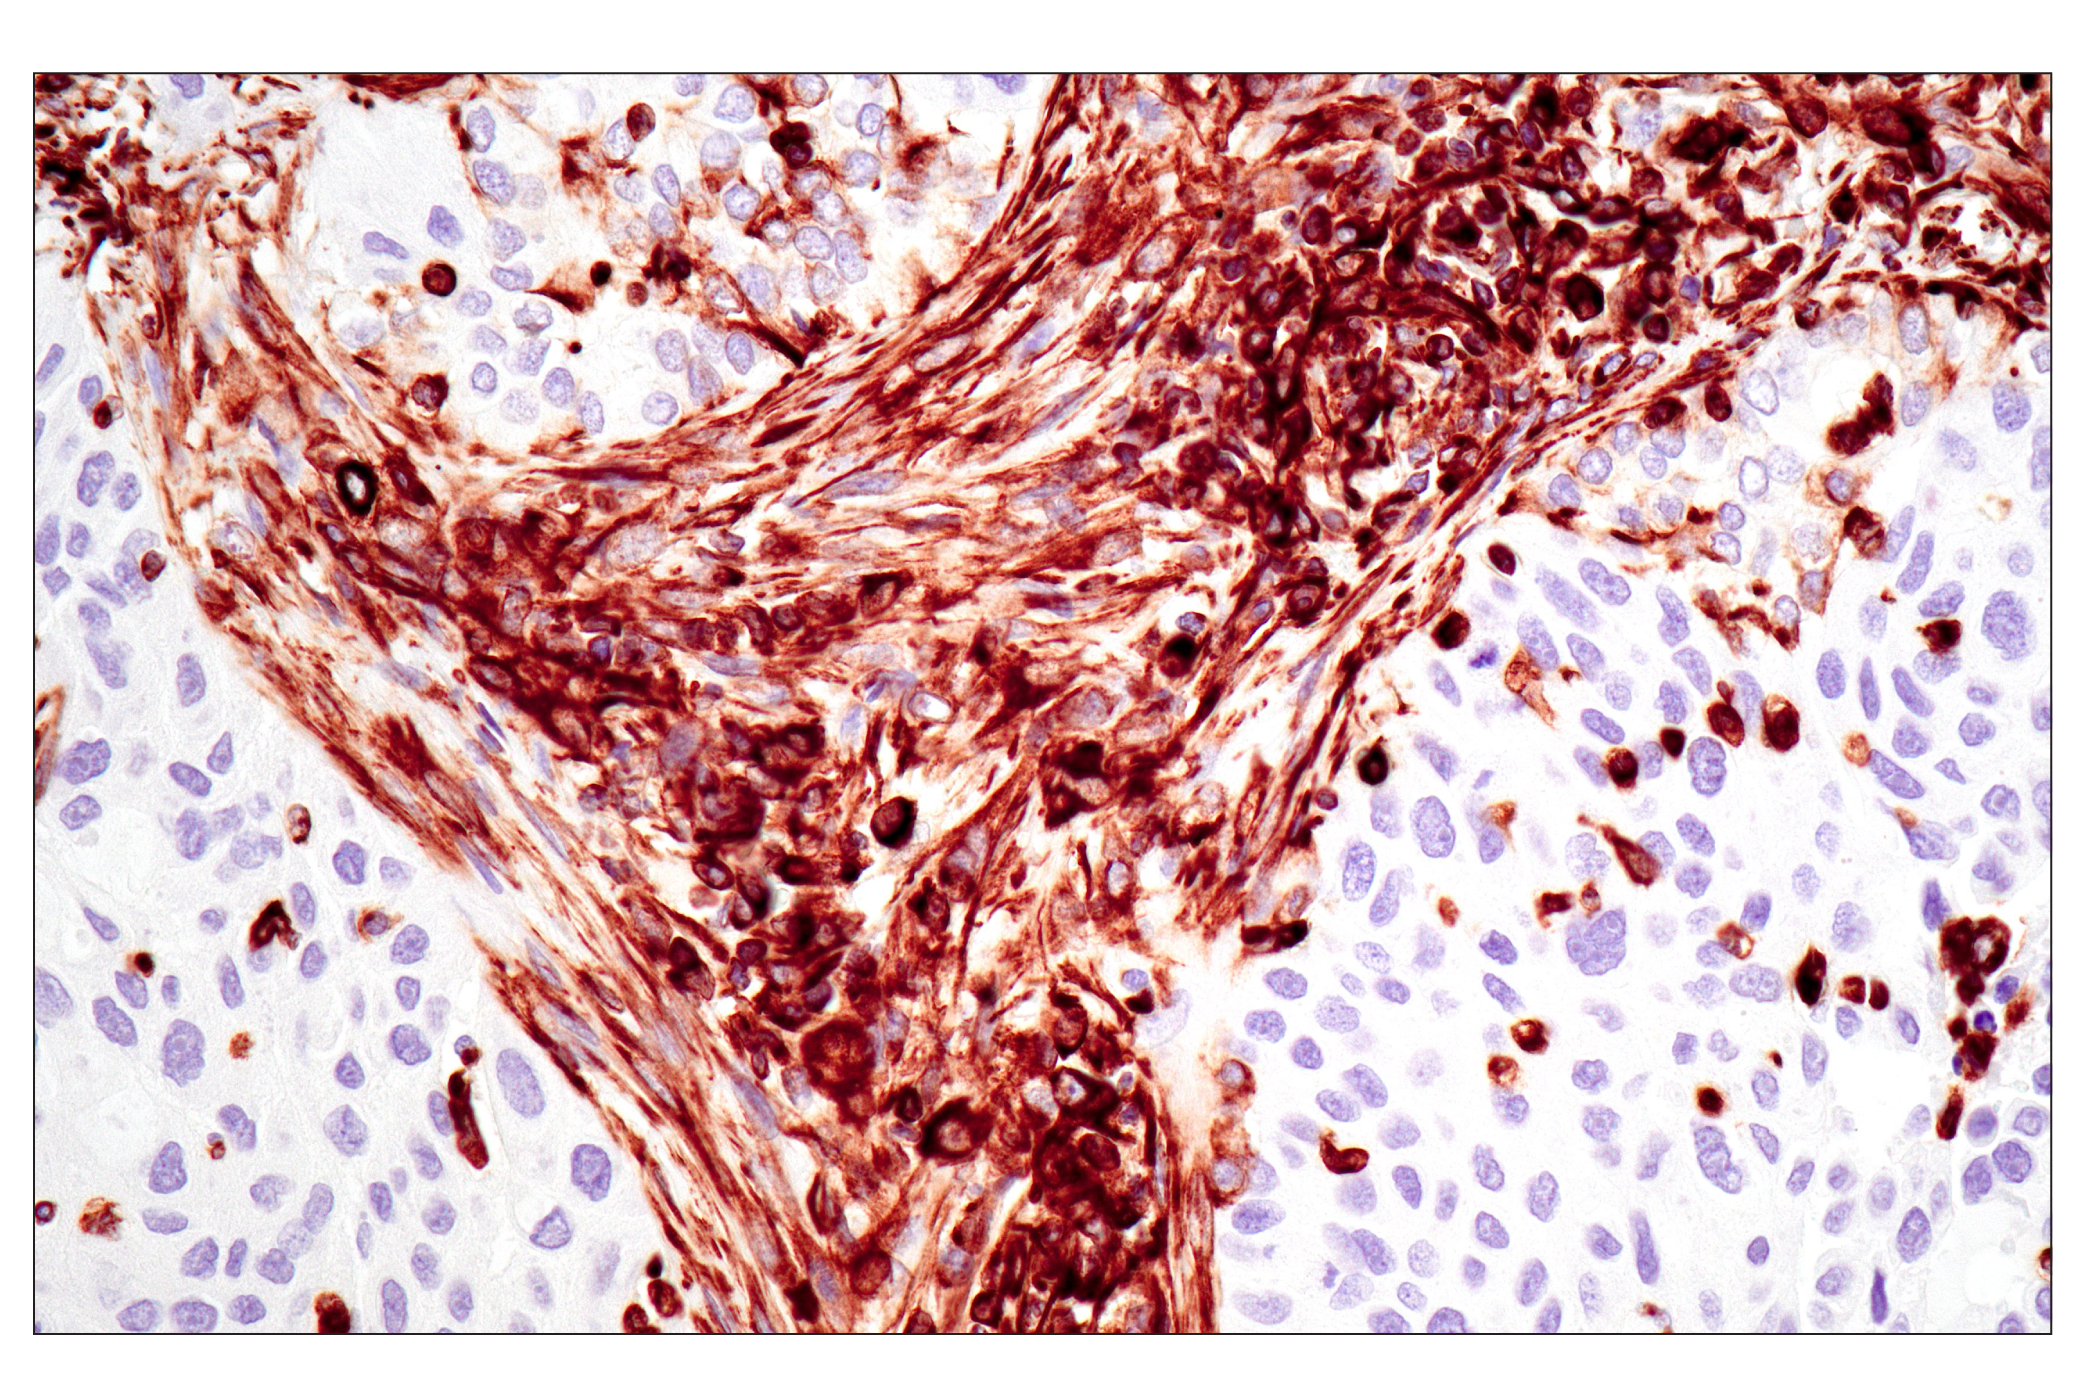  Image 23: Cytoskeletal Marker Antibody Sampler Kit